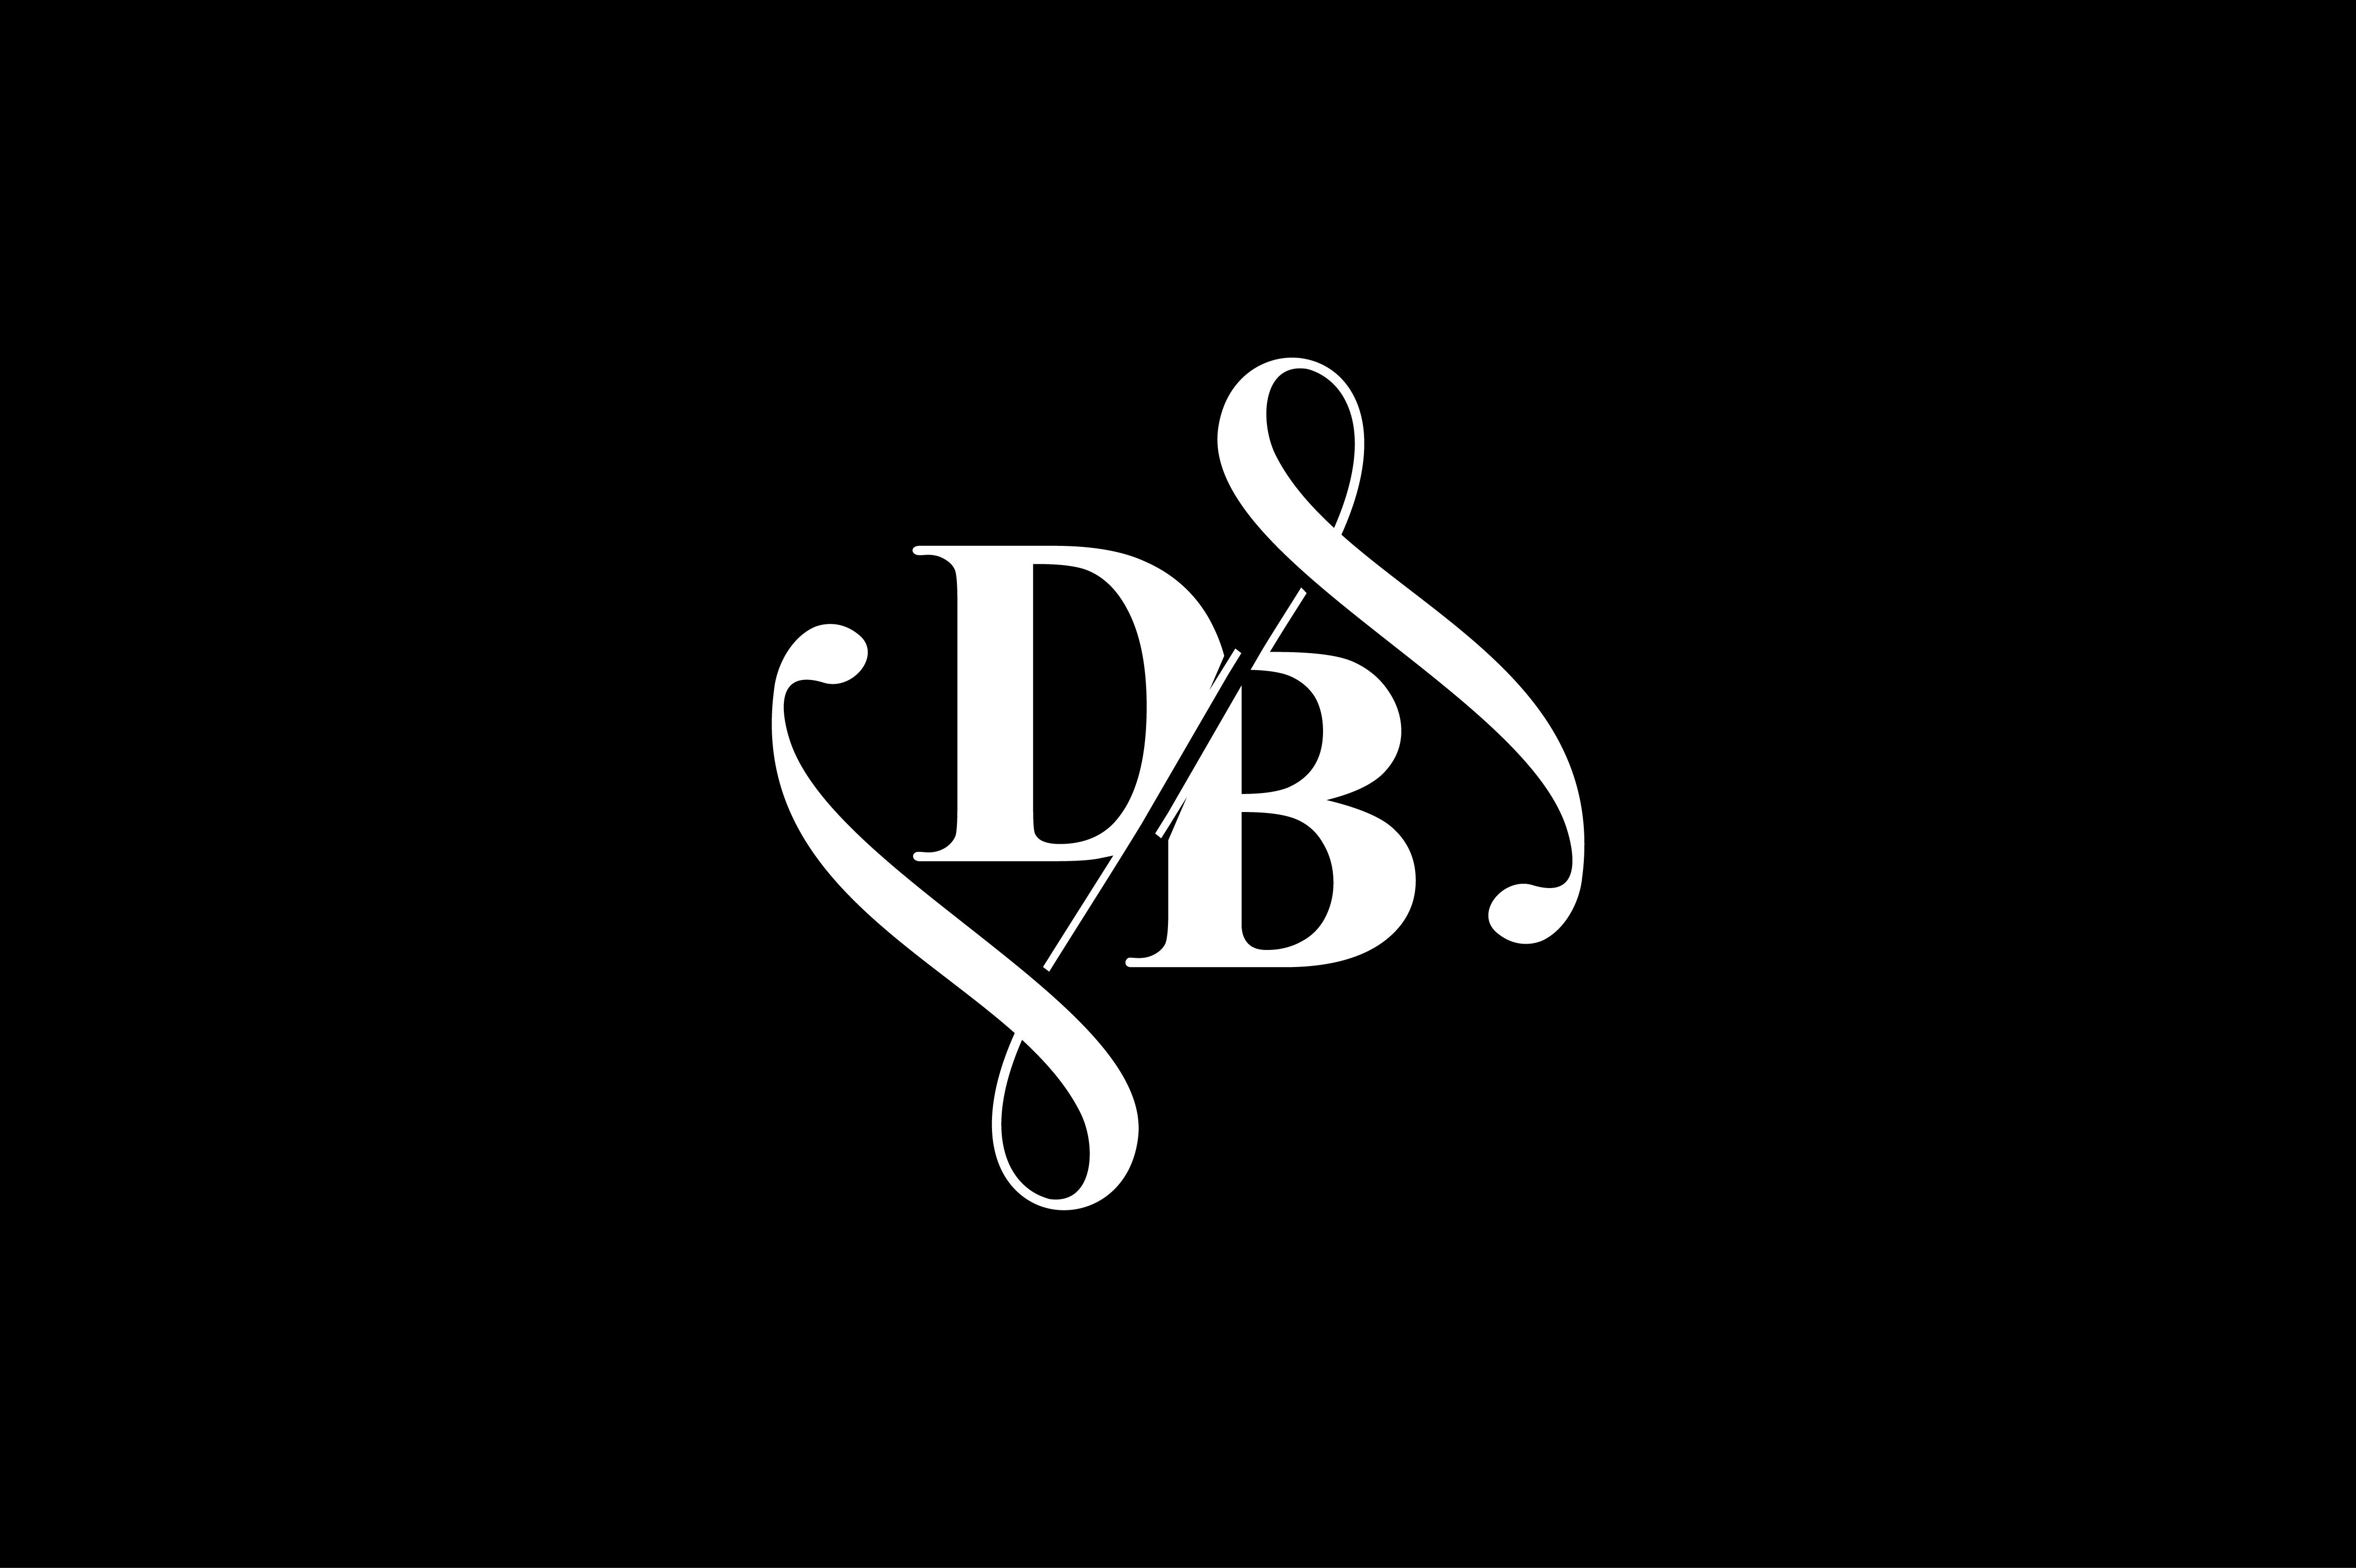 DB Monogram logo Design V6 By Vectorseller | TheHungryJPEG